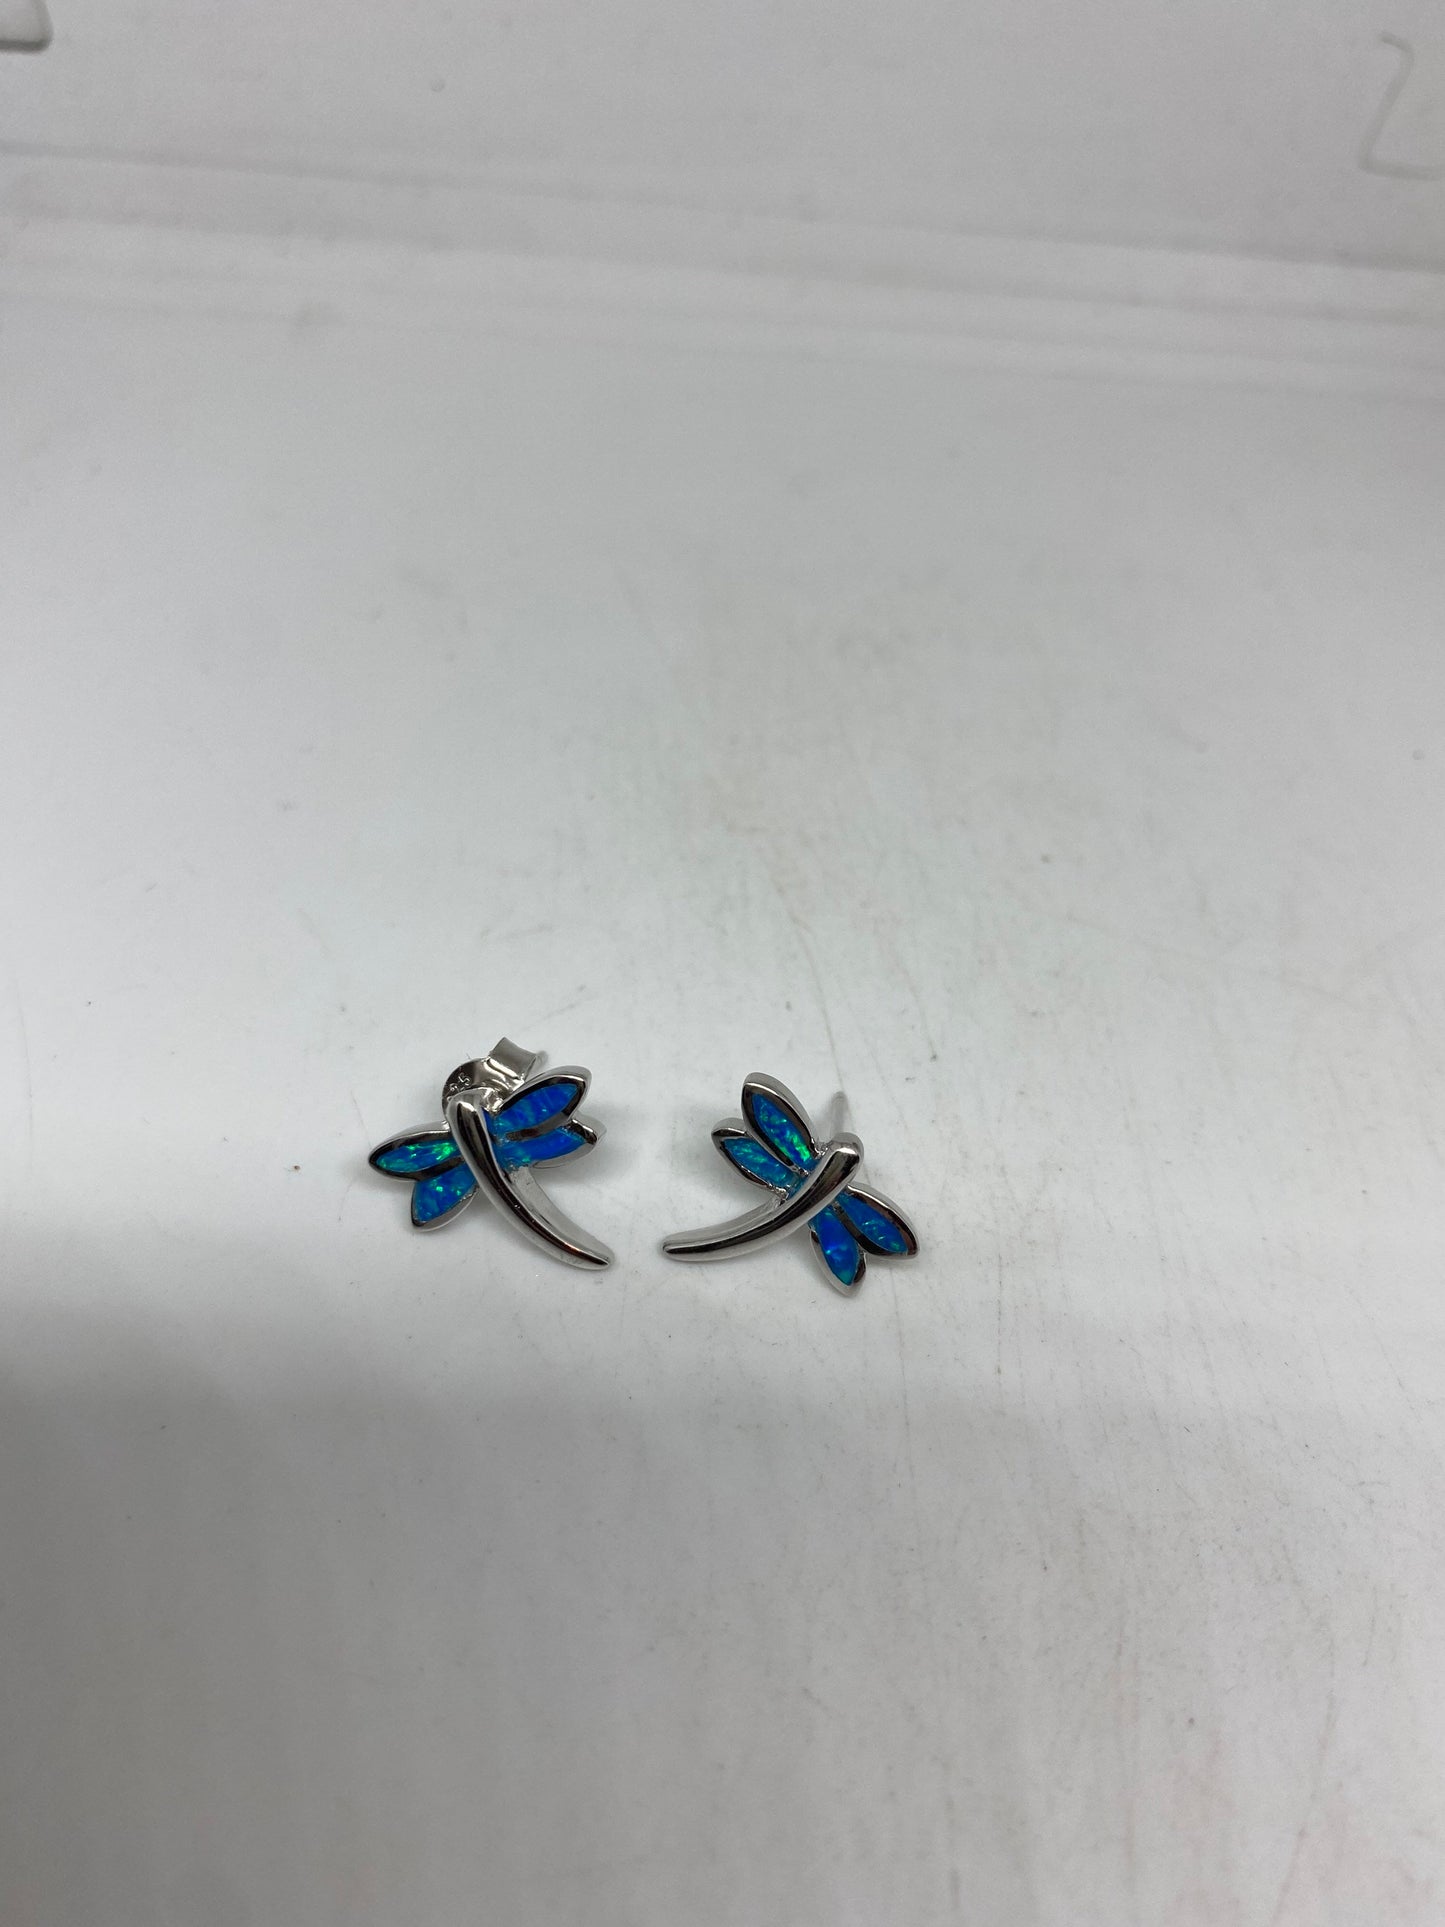 Vintage Blue Opal Dragonfly Earrings 925 Sterling Silver Stud Button